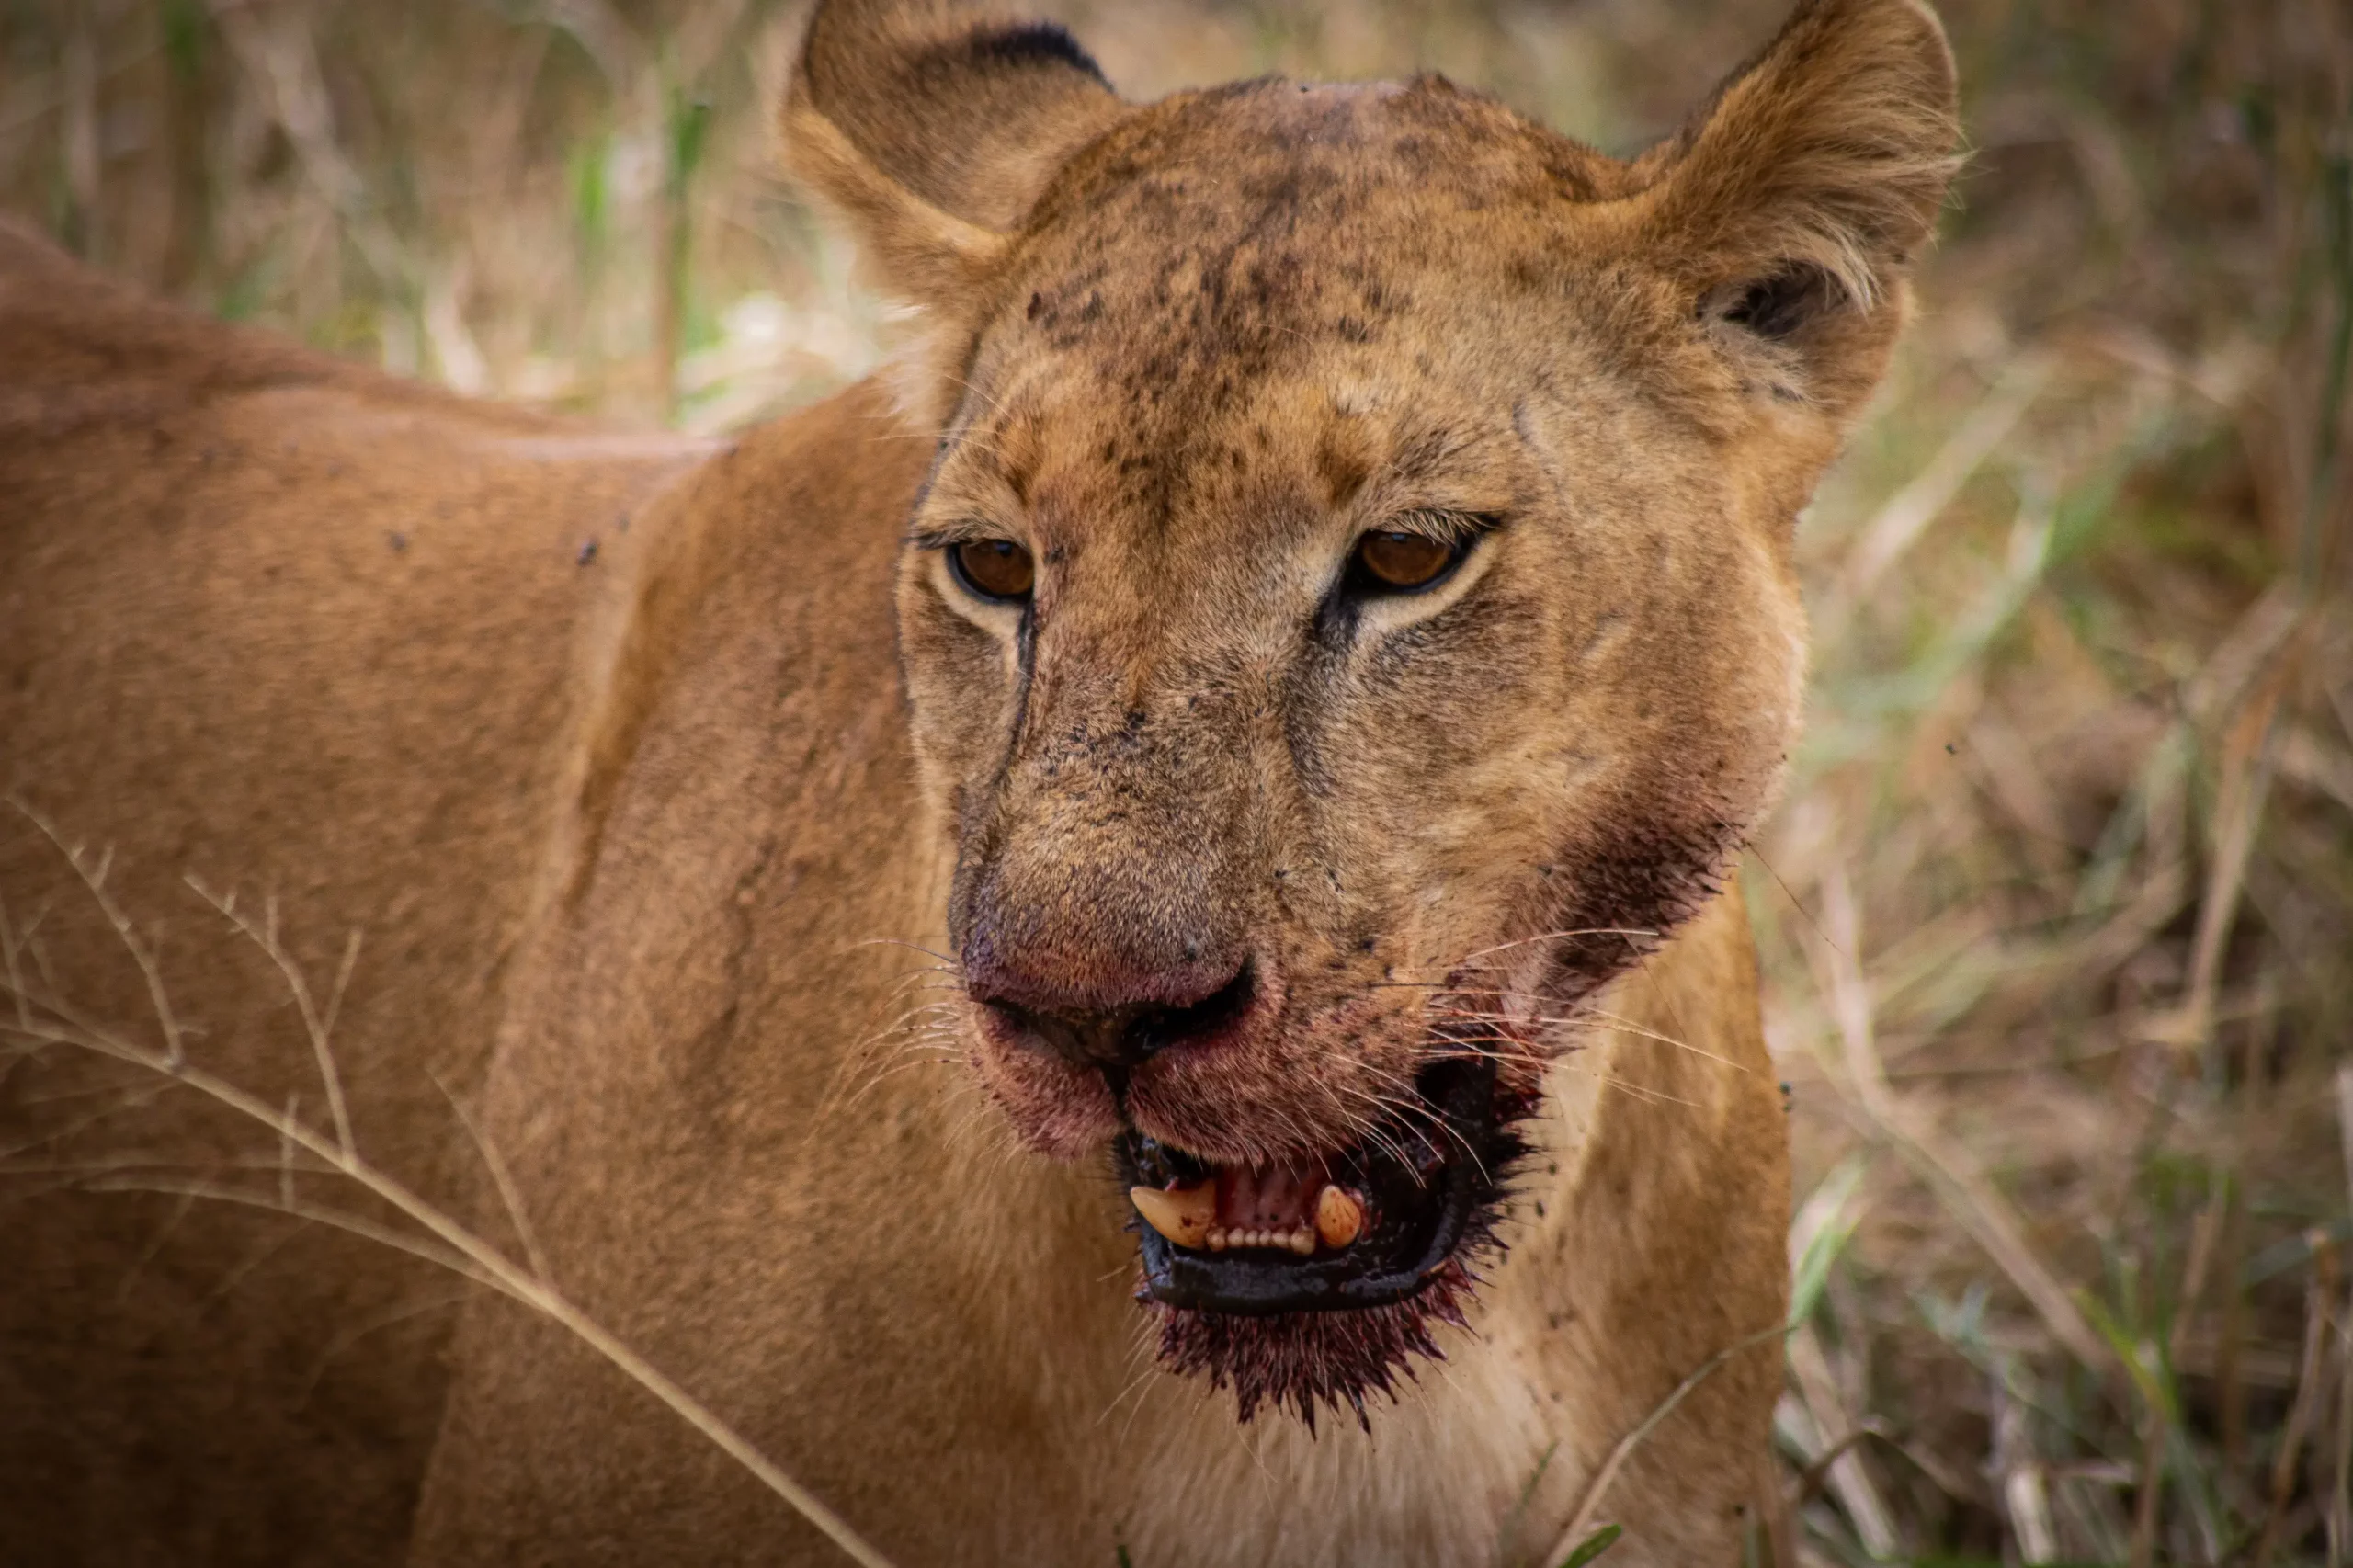 aggressive lioness roaring in joy after having freshly hunted prey